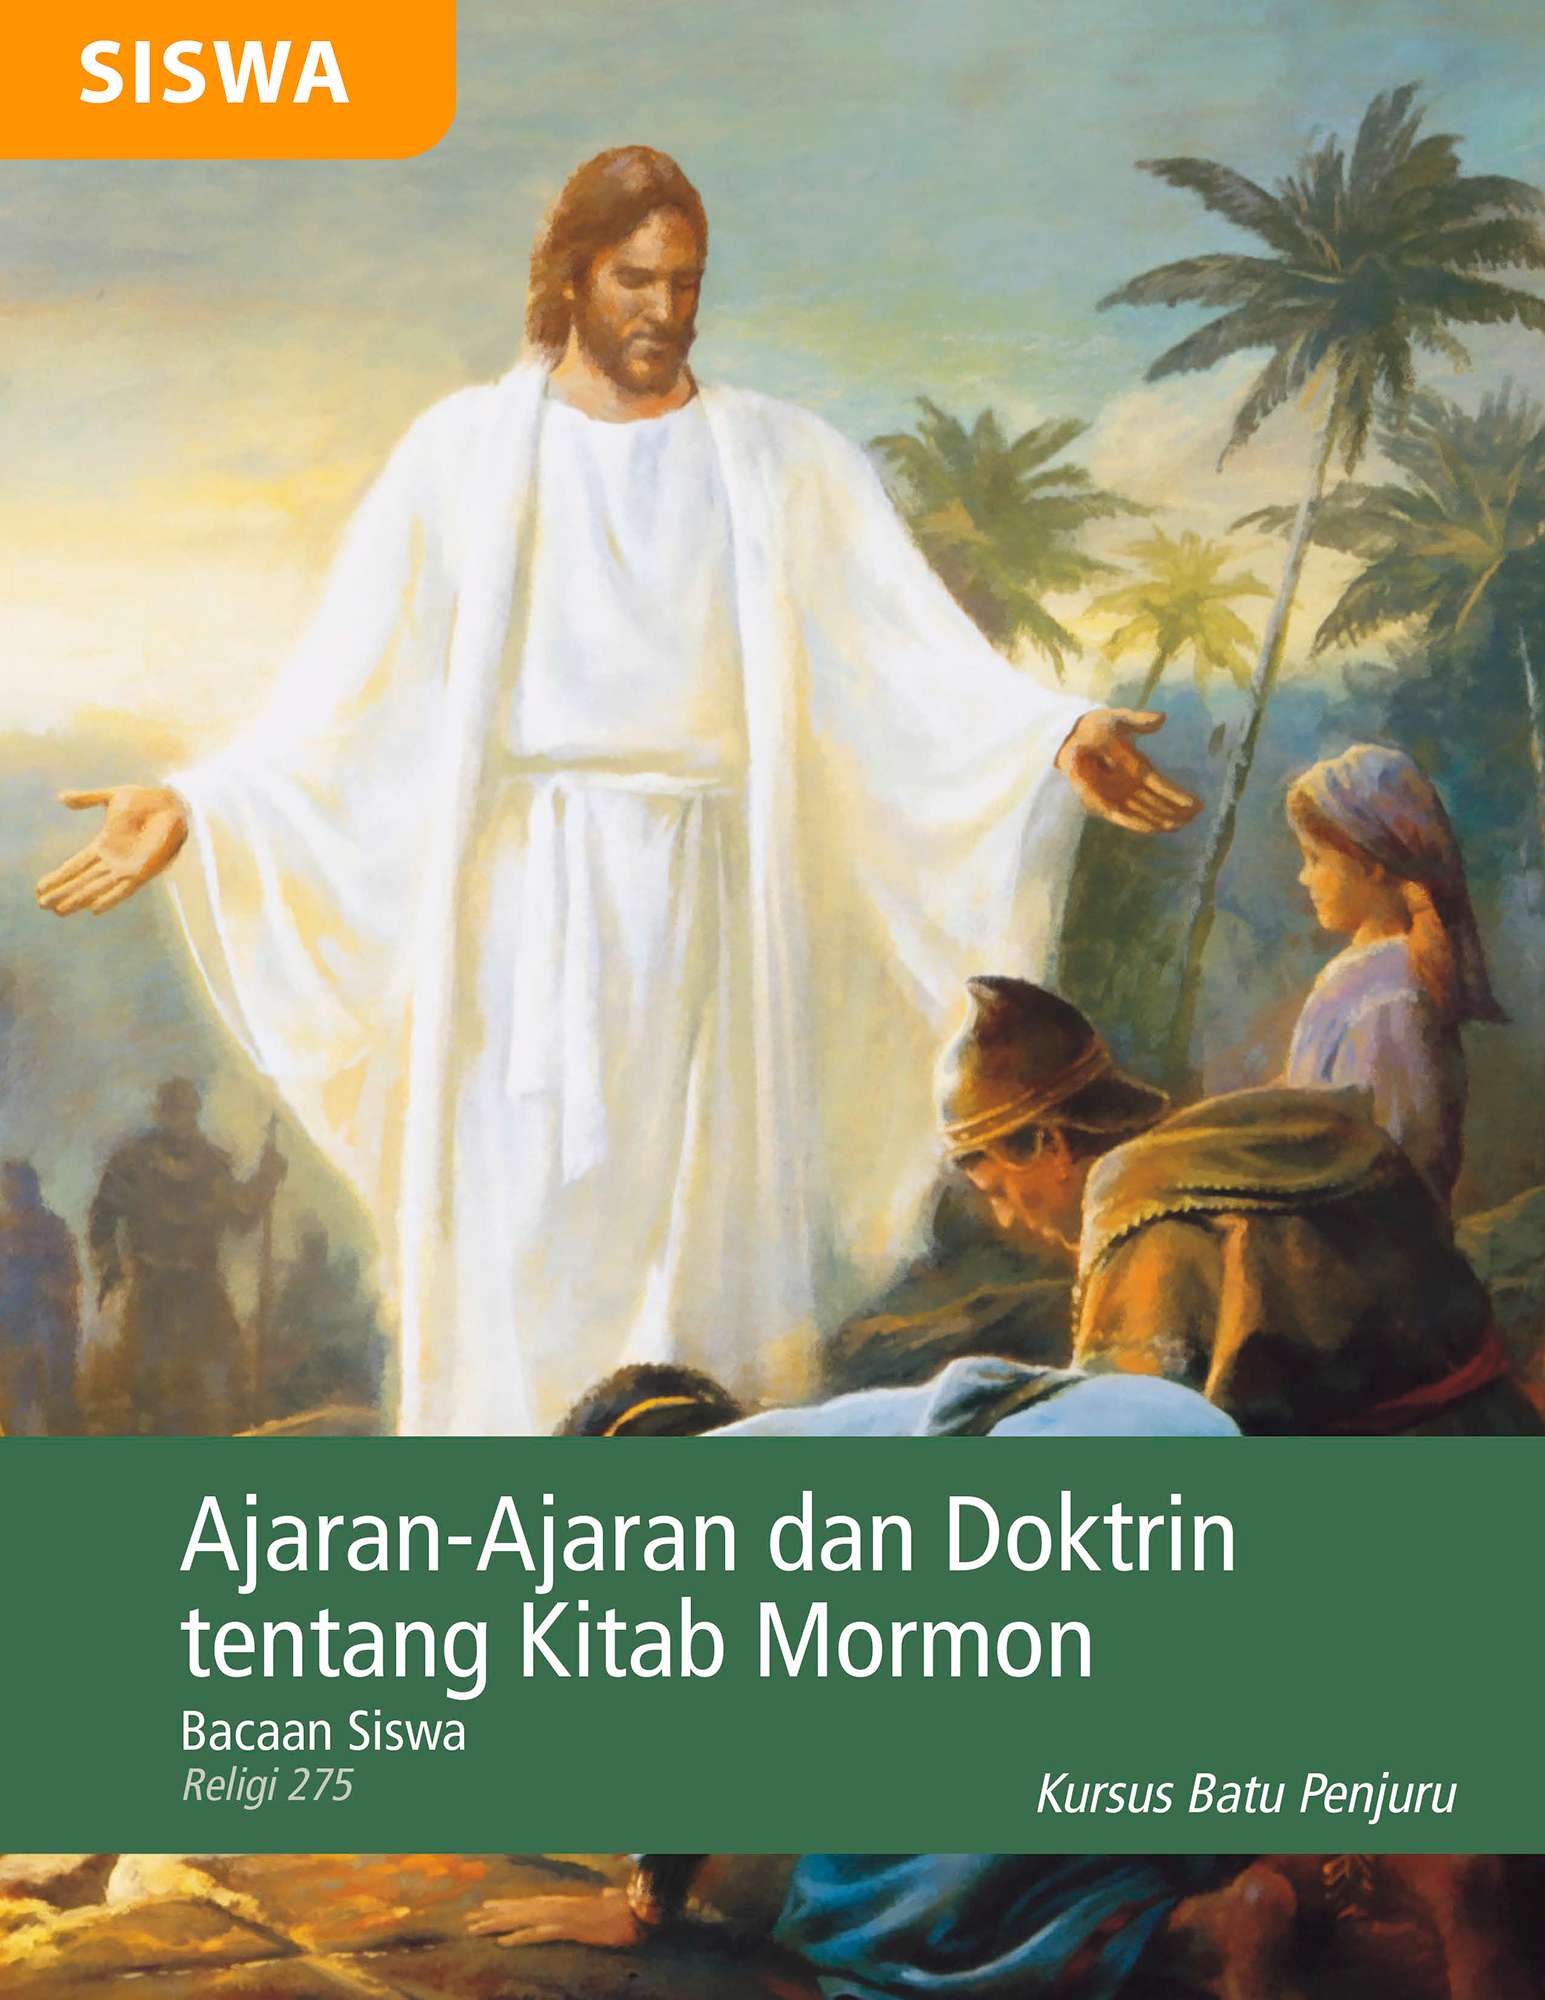 Bacaan Siswa Ajaran dan Doktrin Kitab Mormon (Religi 275)